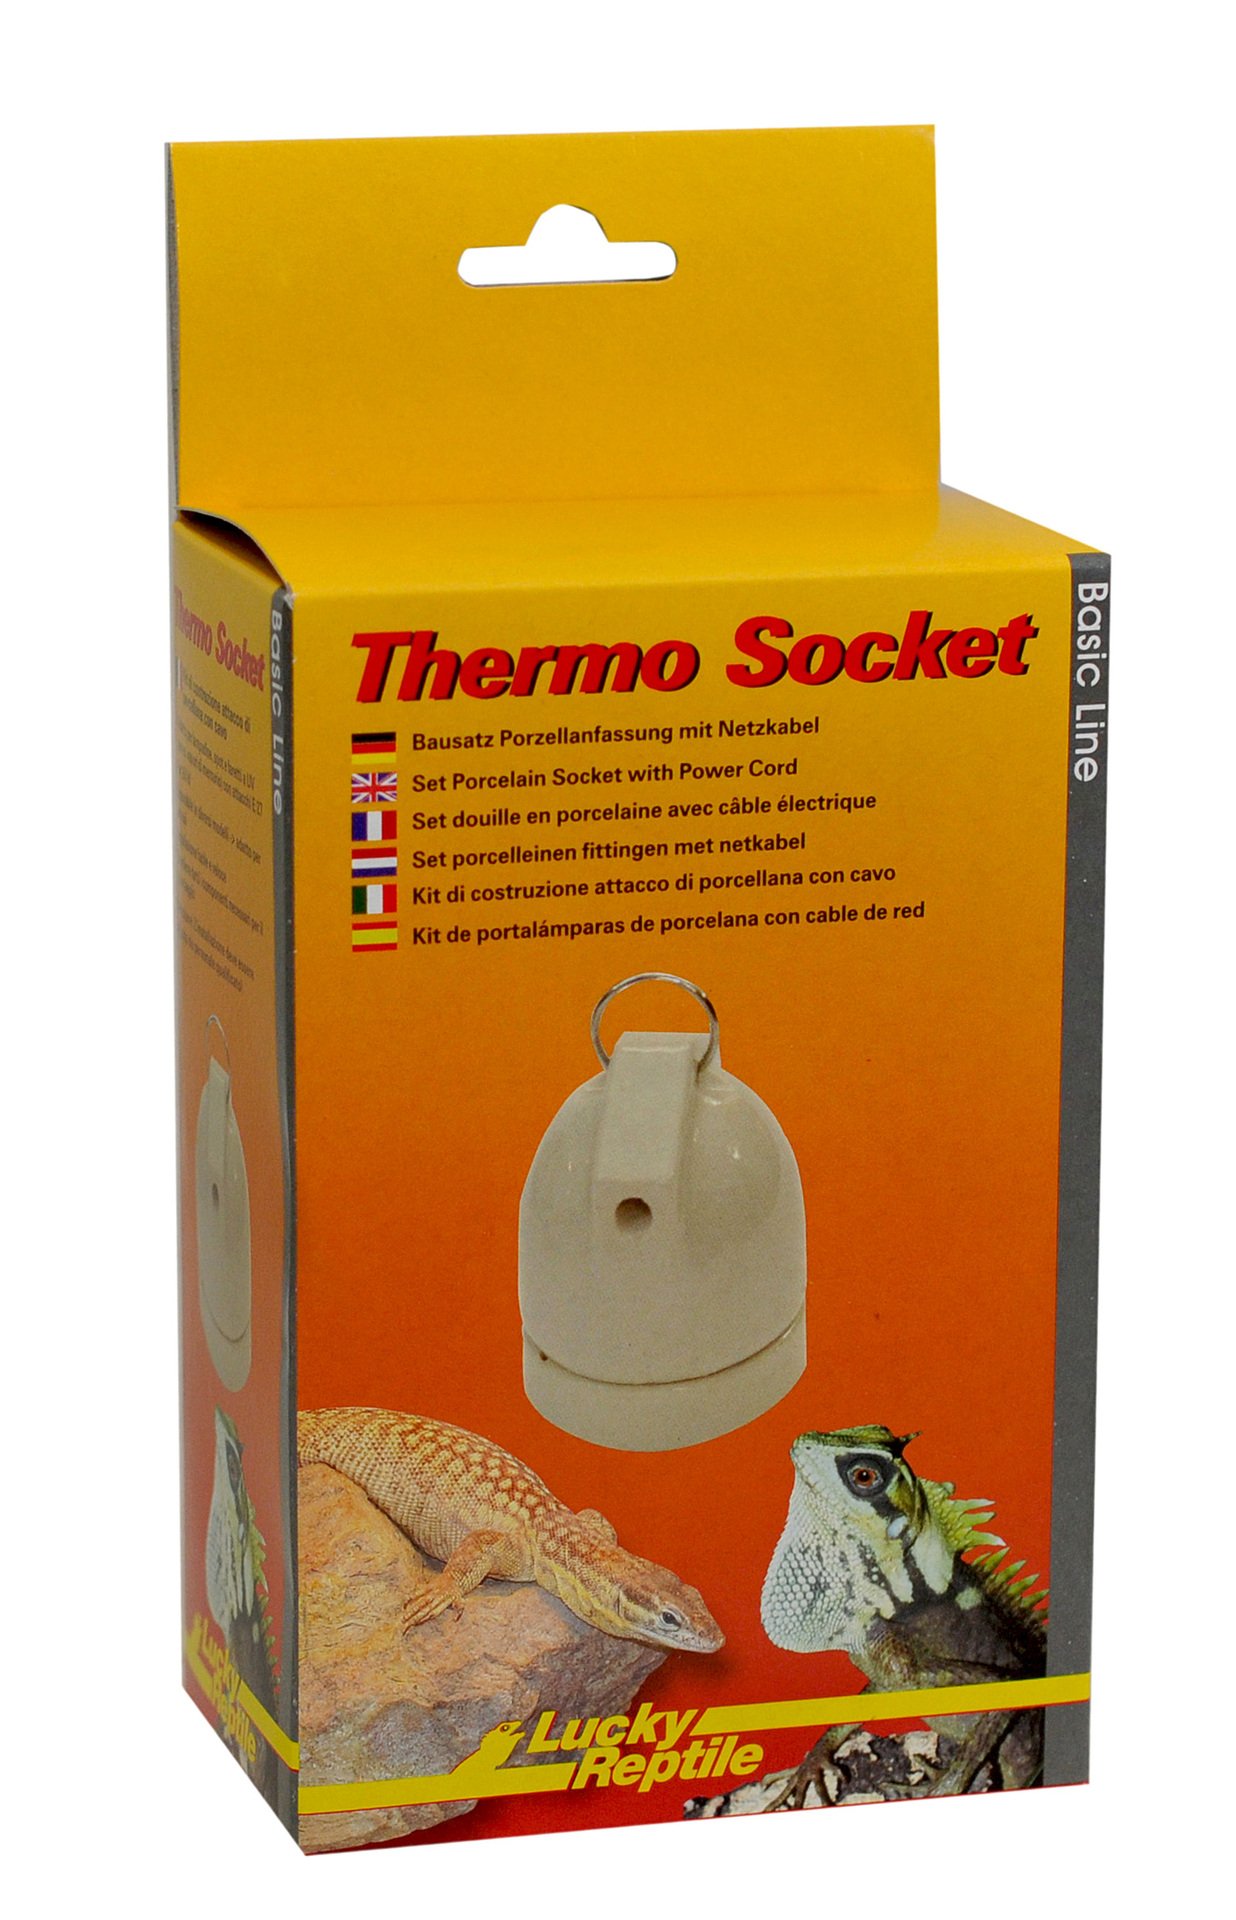 Import-Export Peter Hoch GmbH Thermo Socket – Porzellanfassung